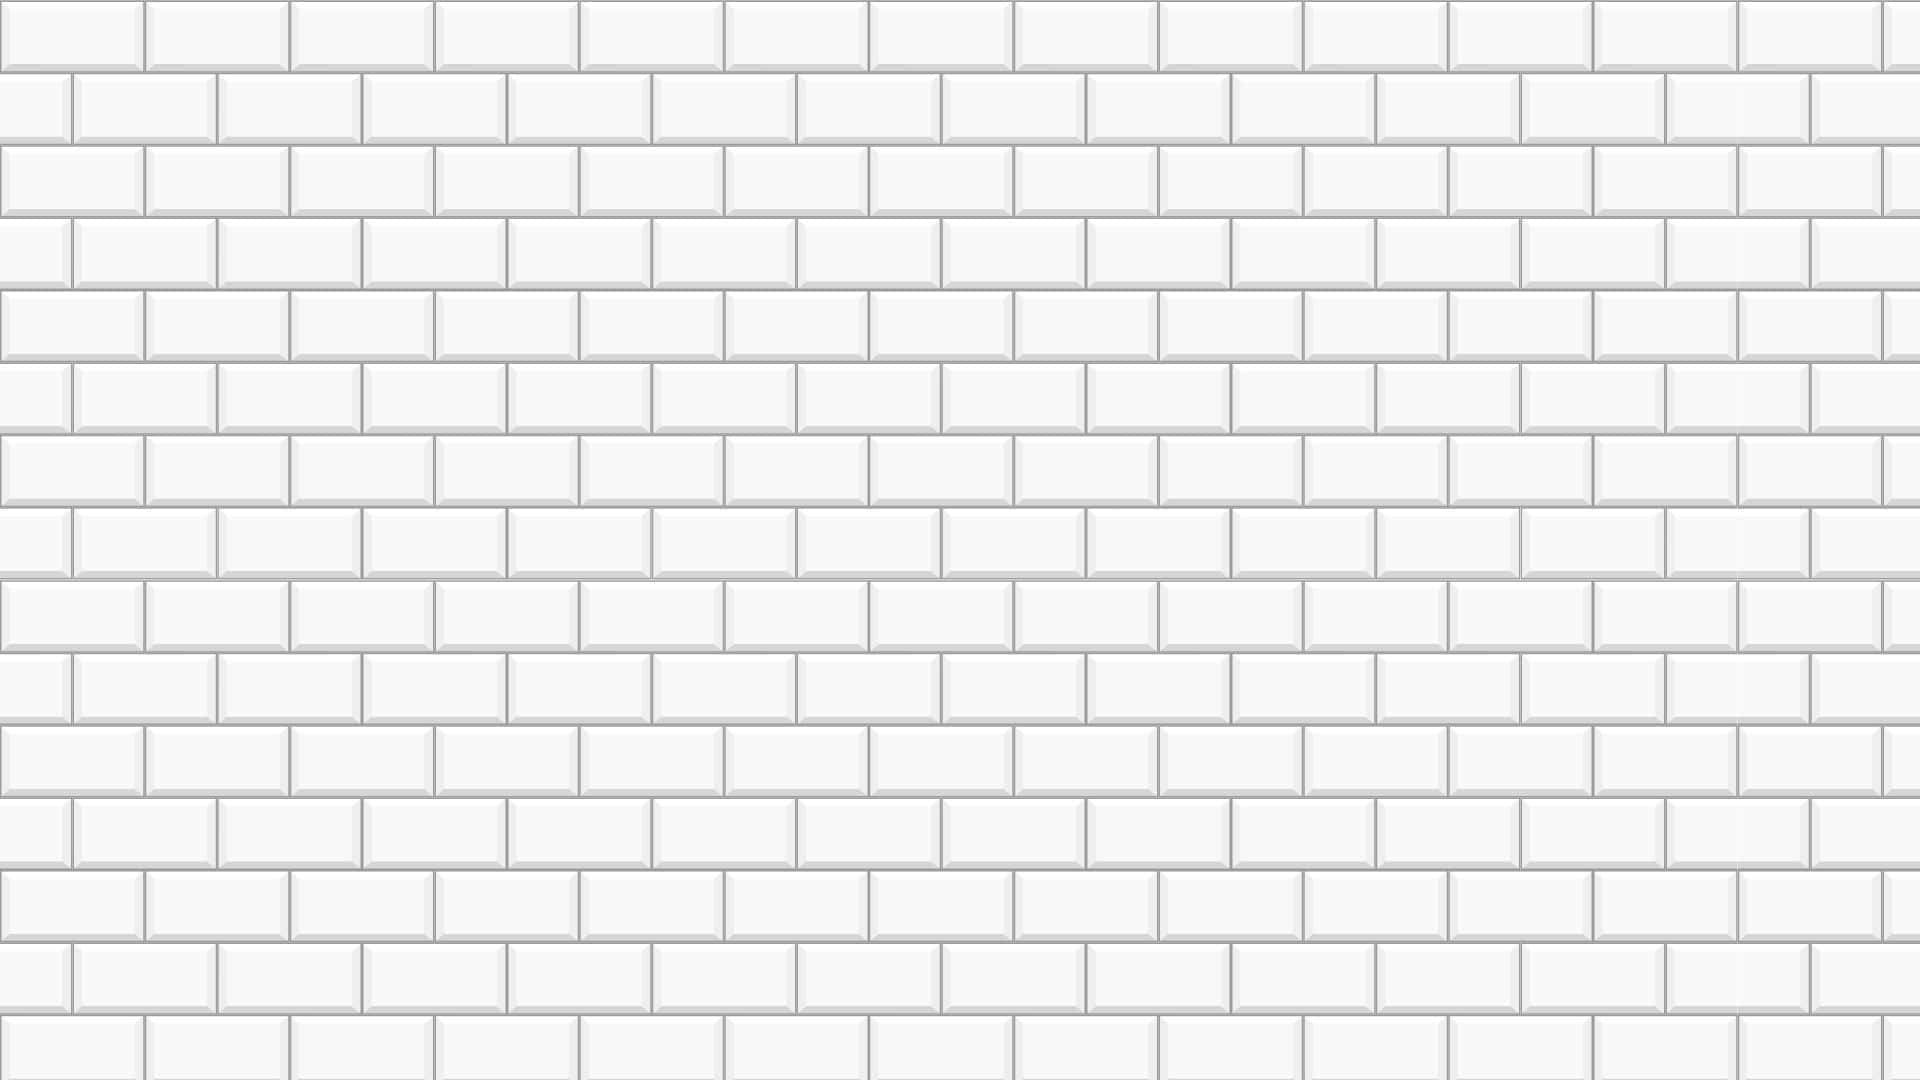 Pink Floyd Wall Wallpaper